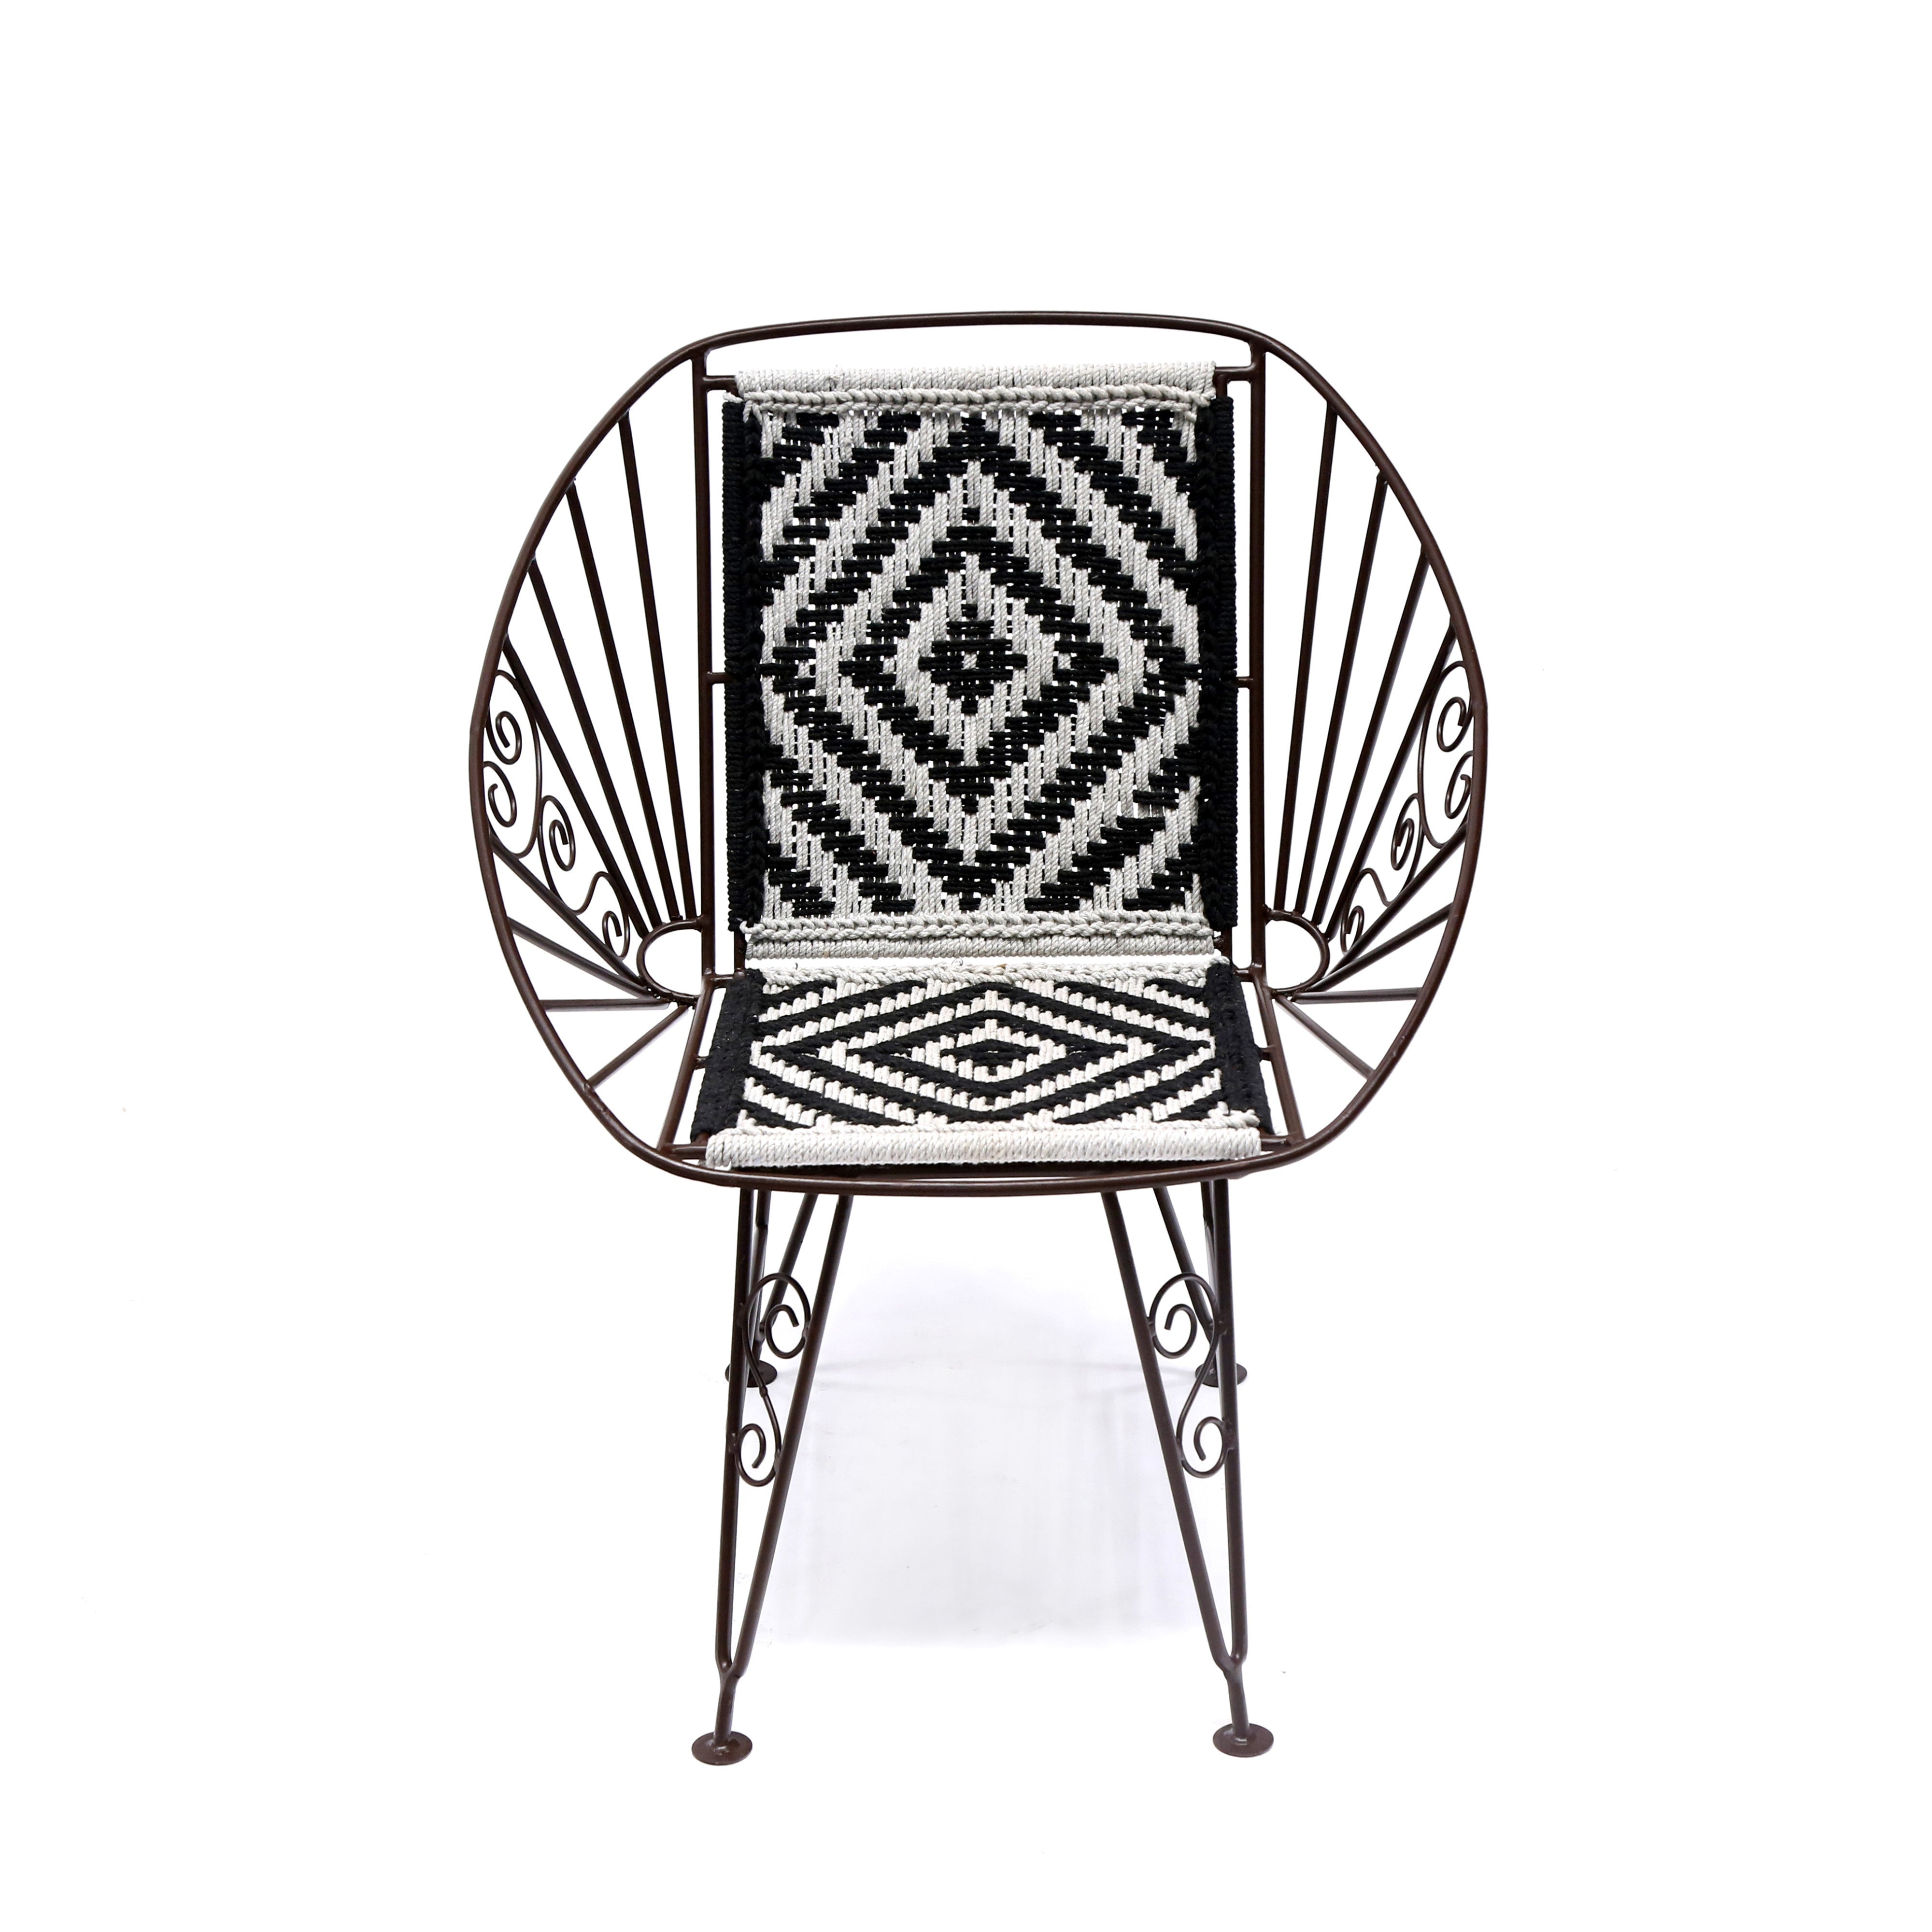 Traditional Art work Metallic Armchair Arm Chair